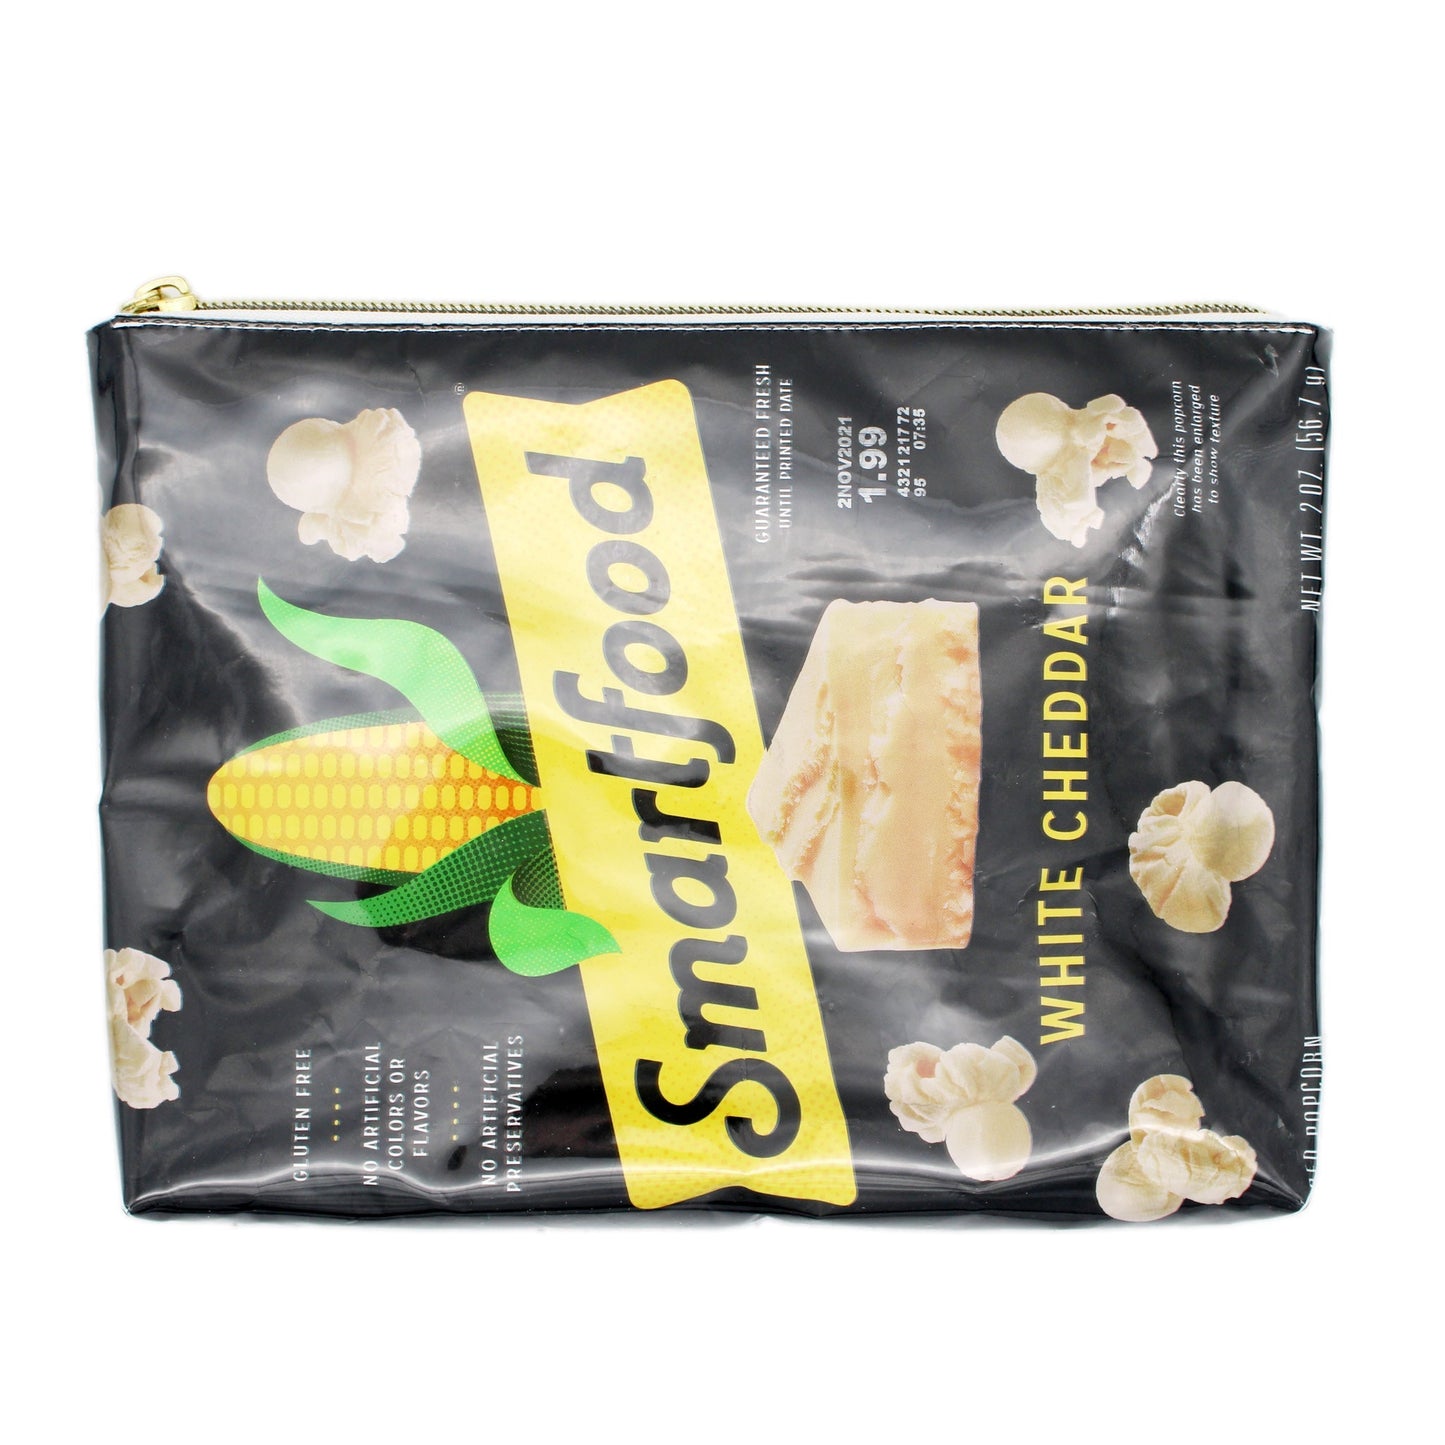 Smartfood White Cheddar Popcorn Großer recycelter Reißverschlussbeutel